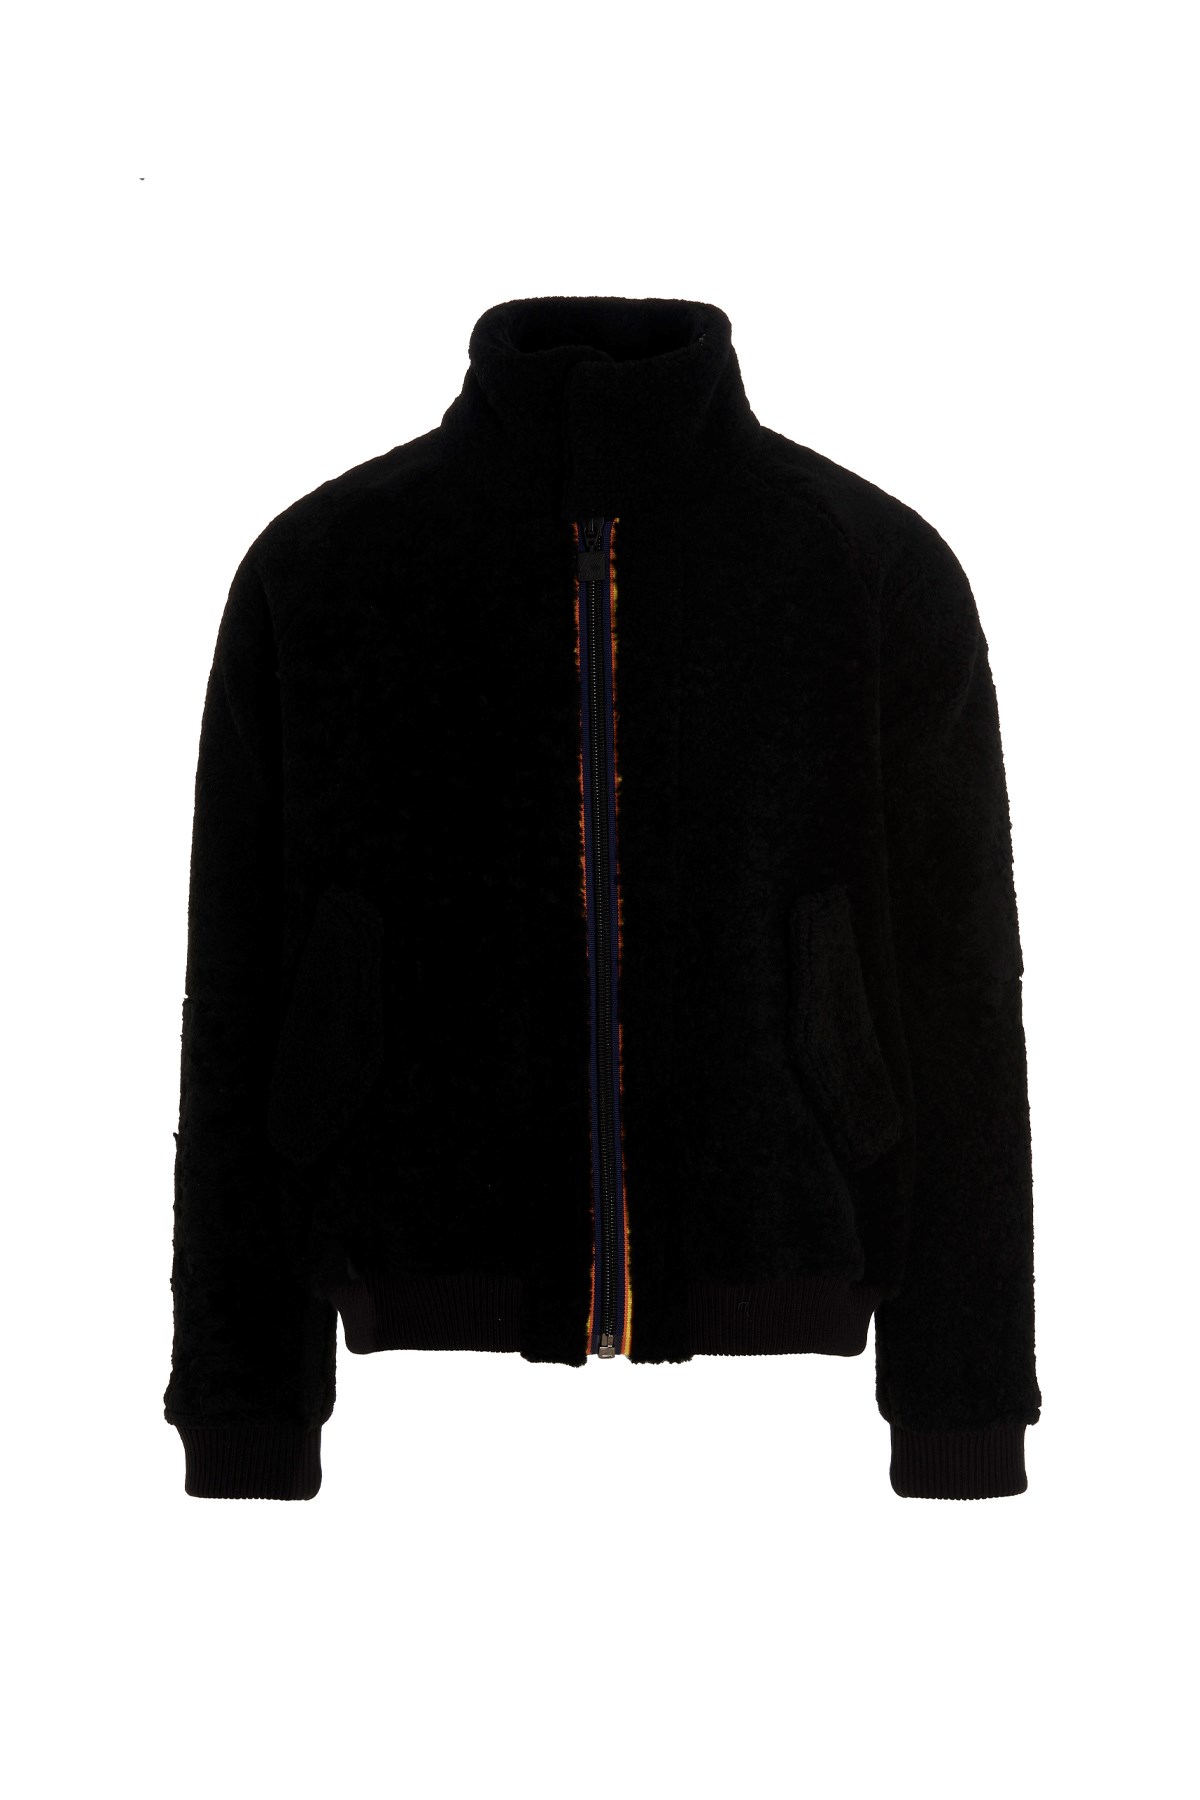 K-WAY R&D 'London' Shearling Jacket